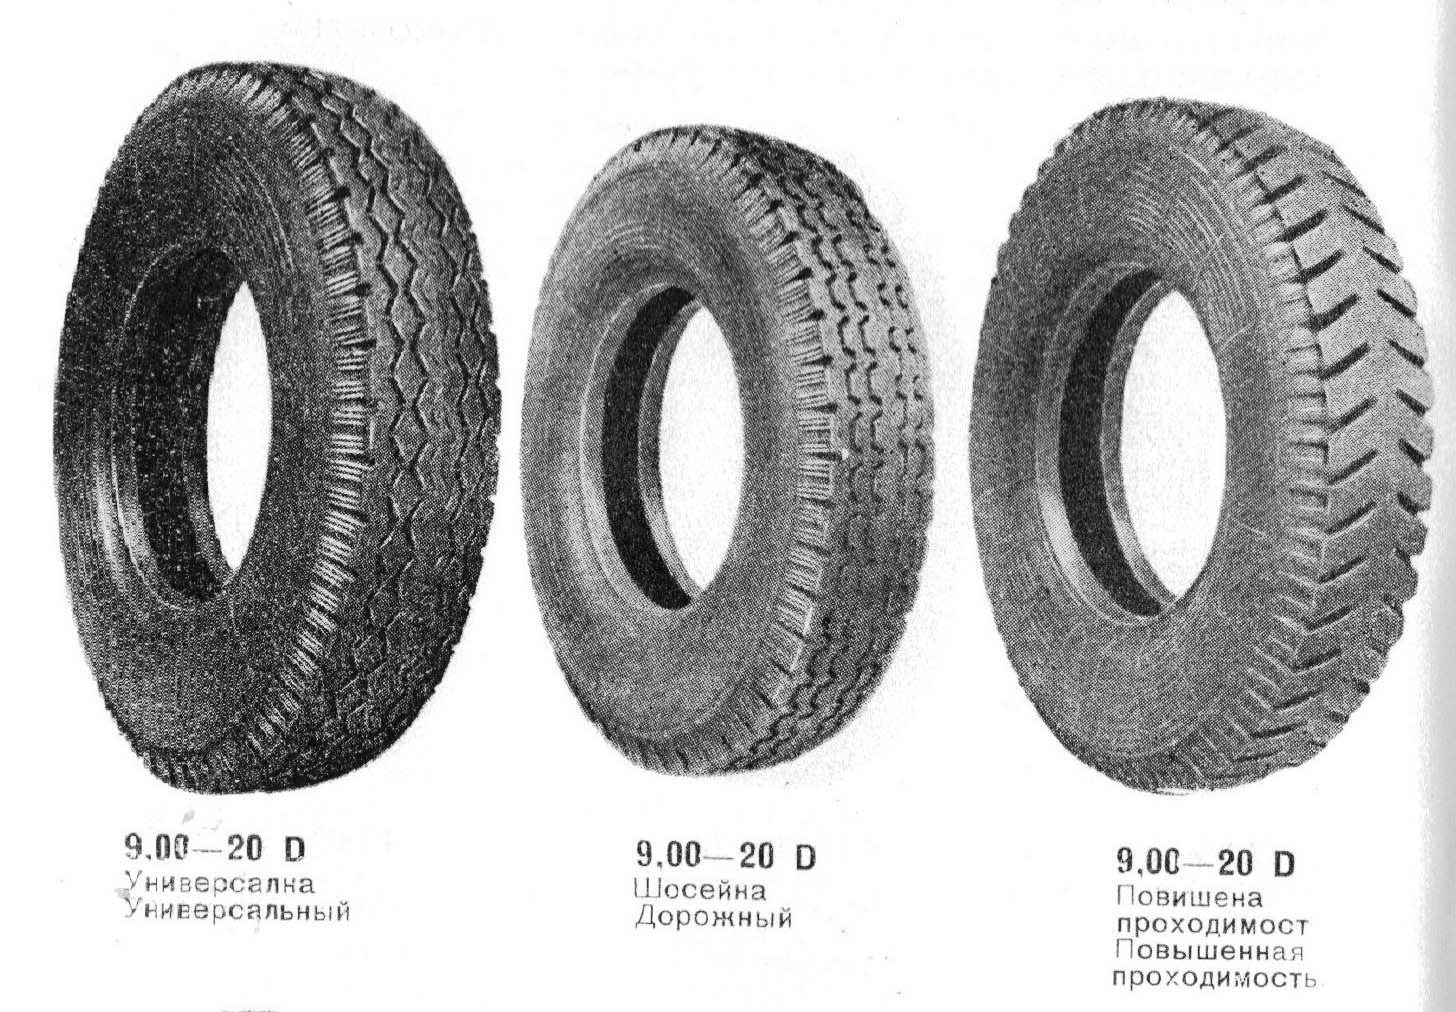 Български автомобилни гуми завод за автомобилни гуми Георги Димитров